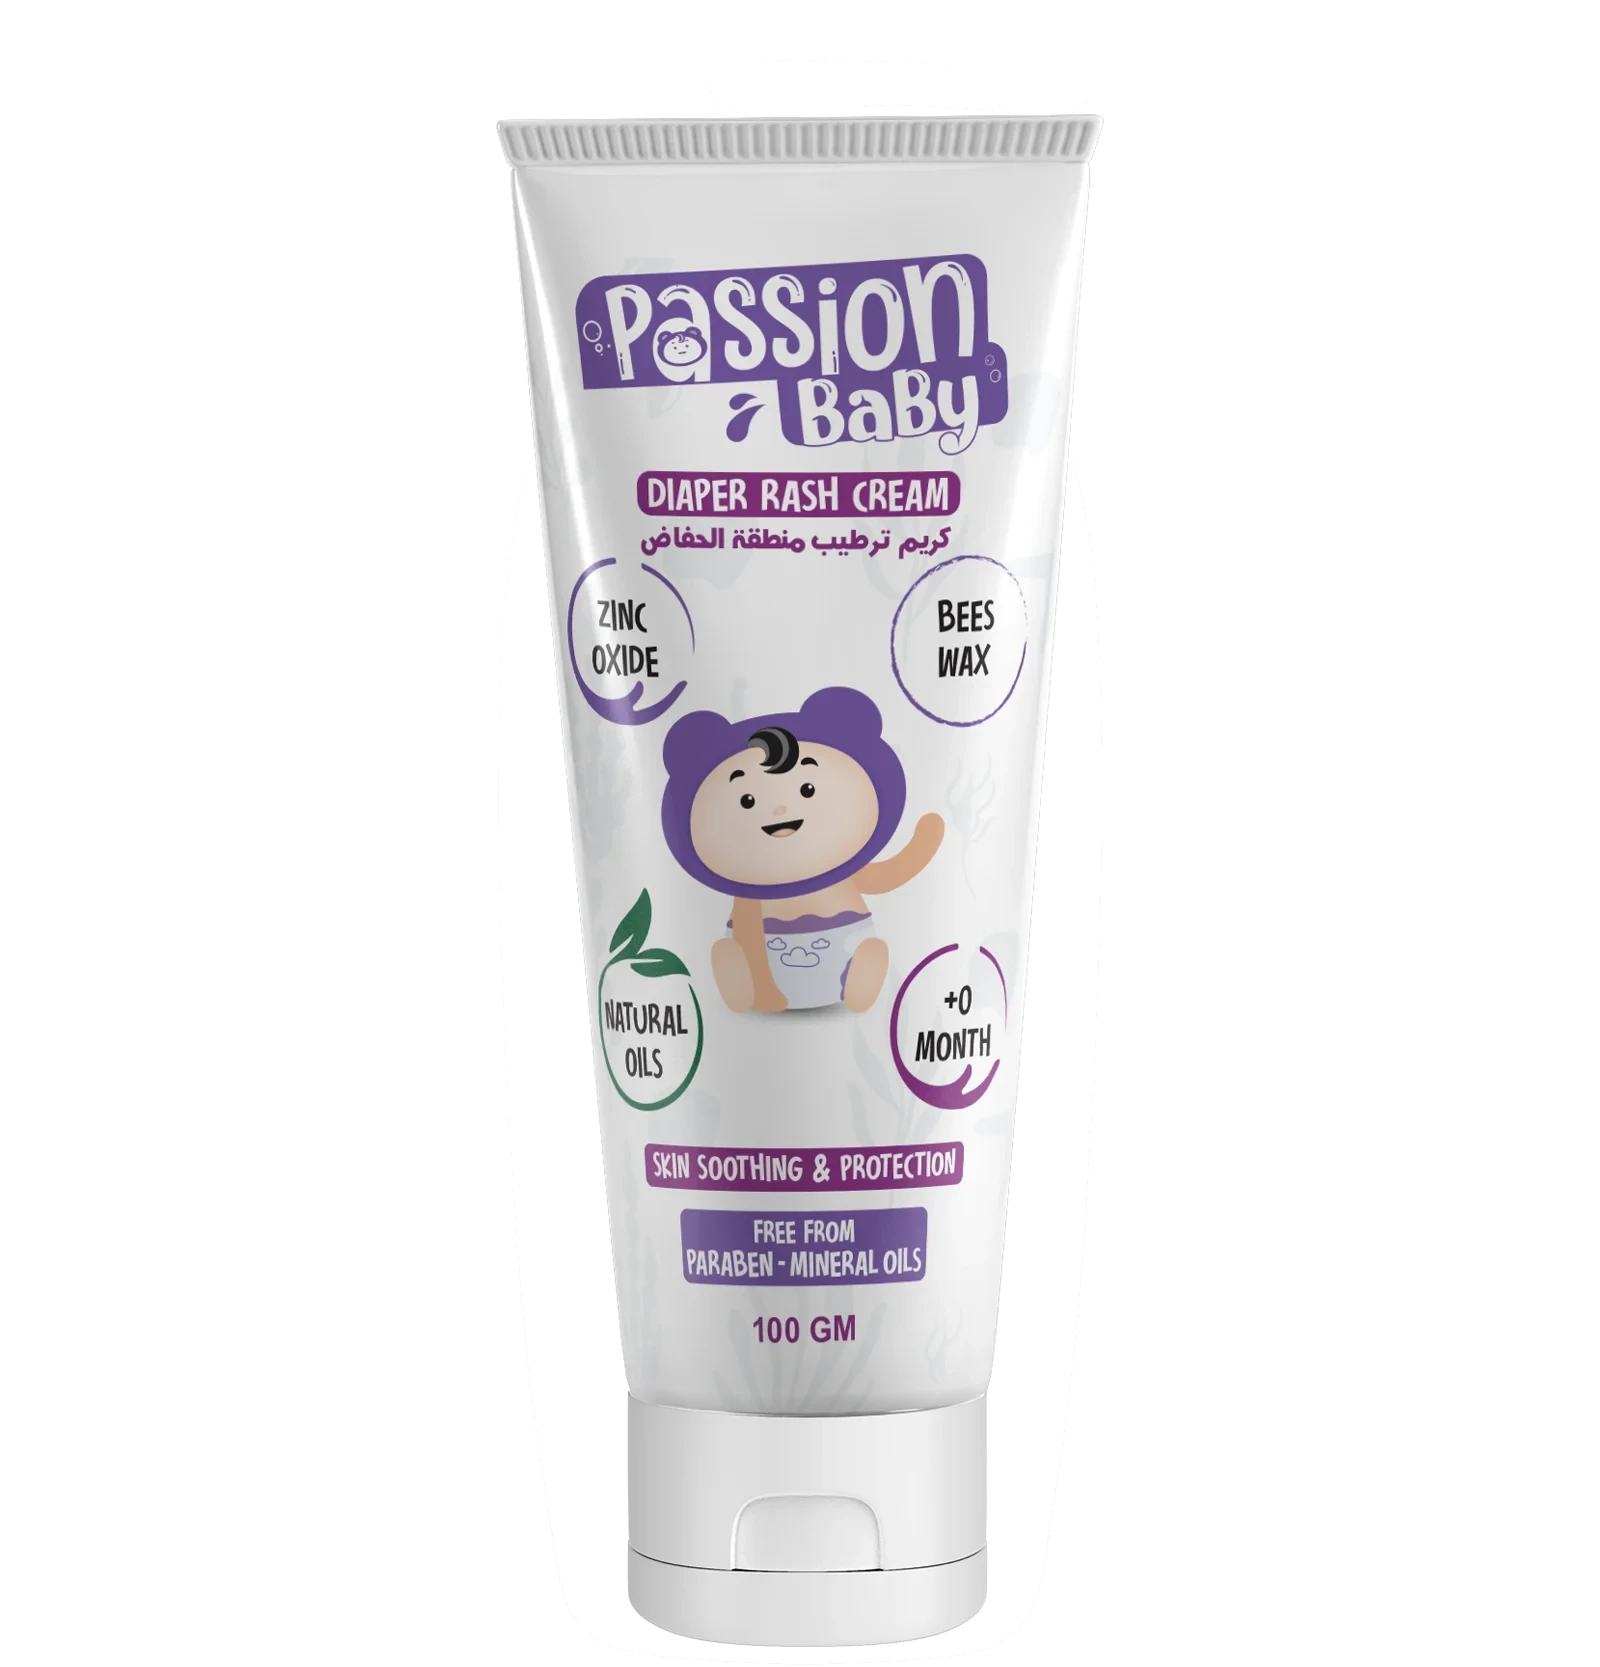 Passion Baby diaper rash cream